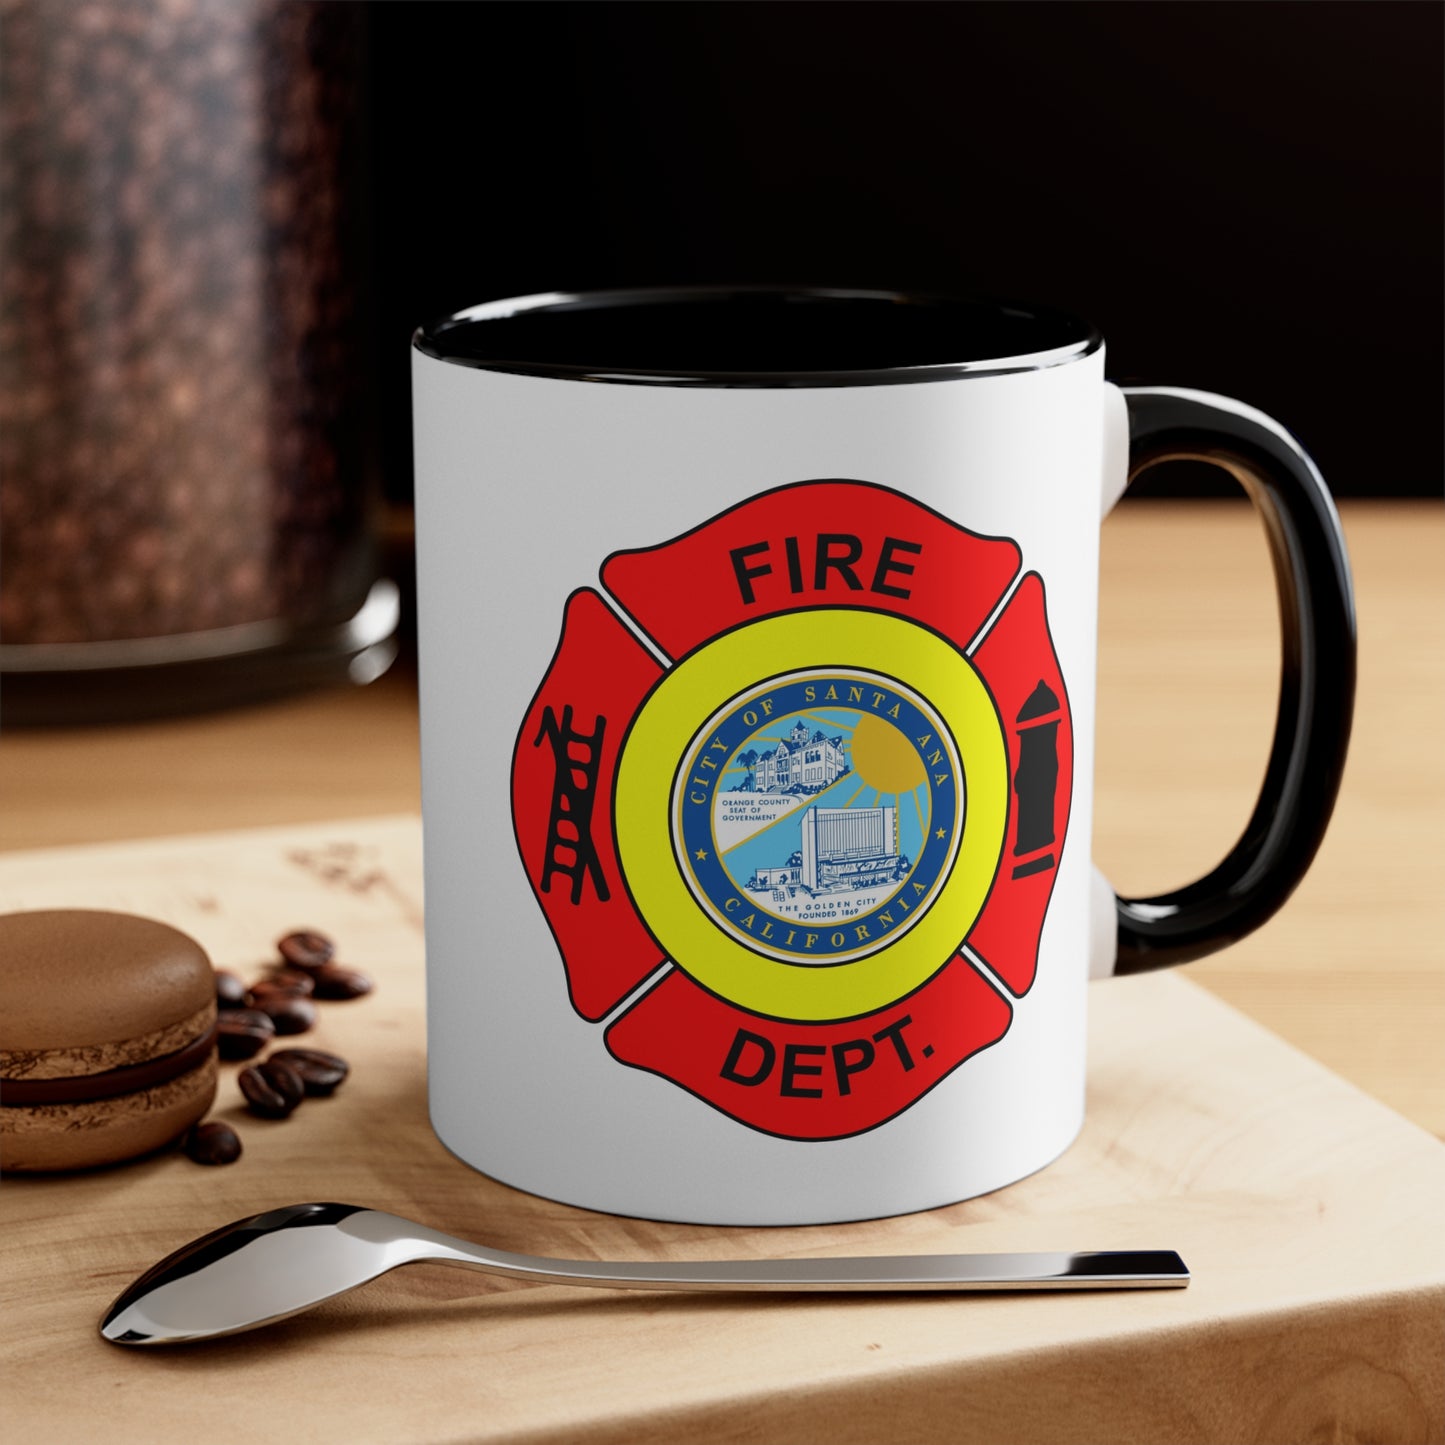 Santa Ana Fire Department Coffee Mug - Double Sided Black Accent White Ceramic 11oz by TheGlassyLass.com